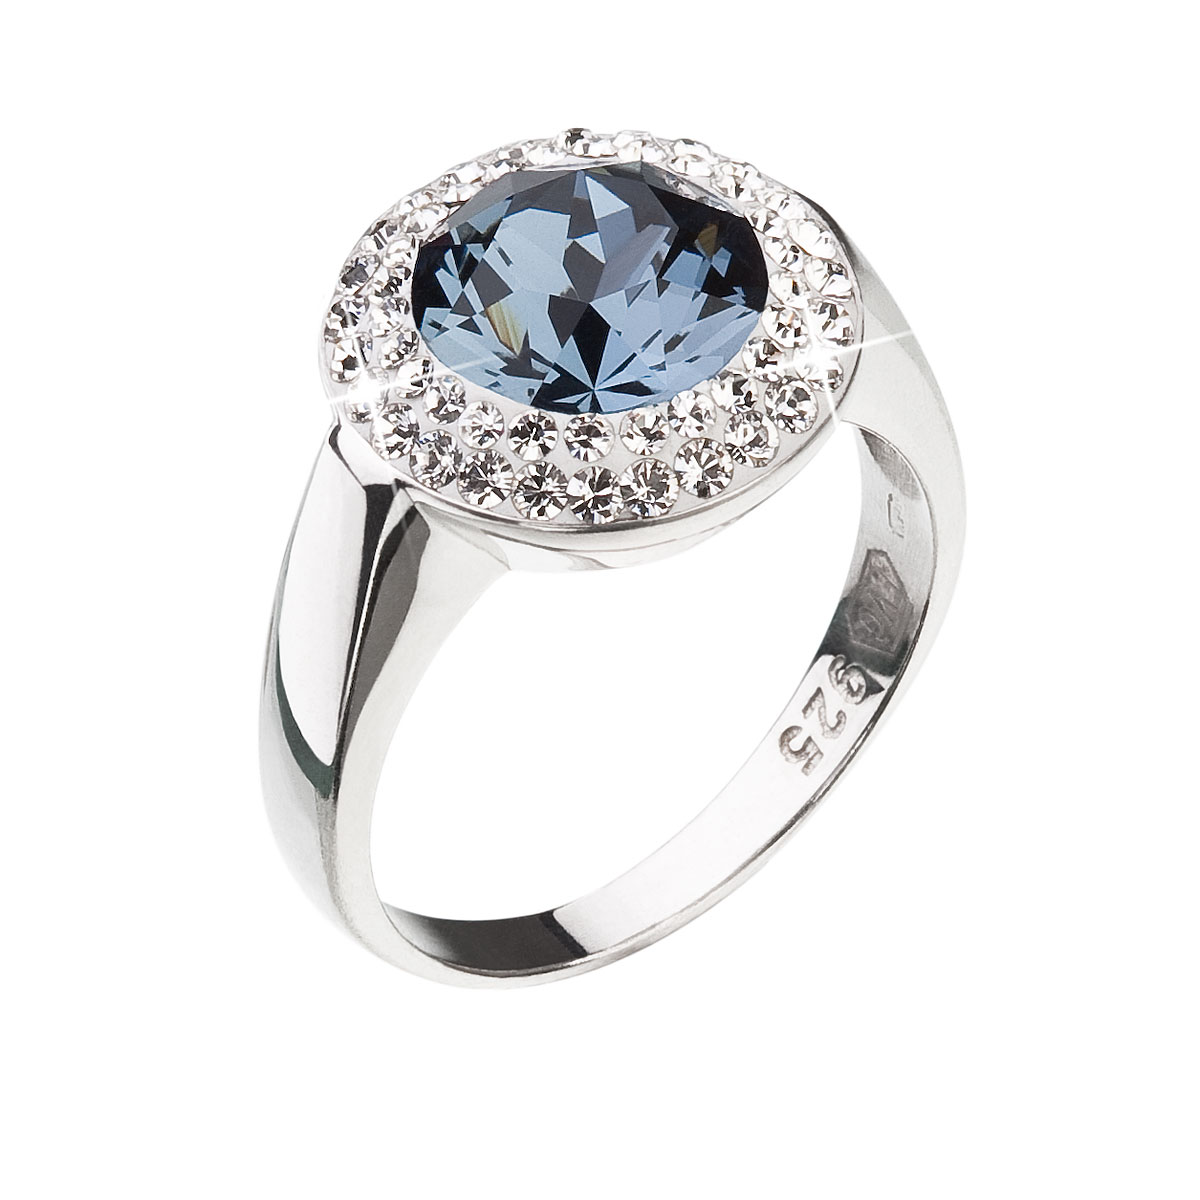 Evolution Group Stříbrný prsten s krystaly Swarovski modrý kulatý 35026.3 denim blue